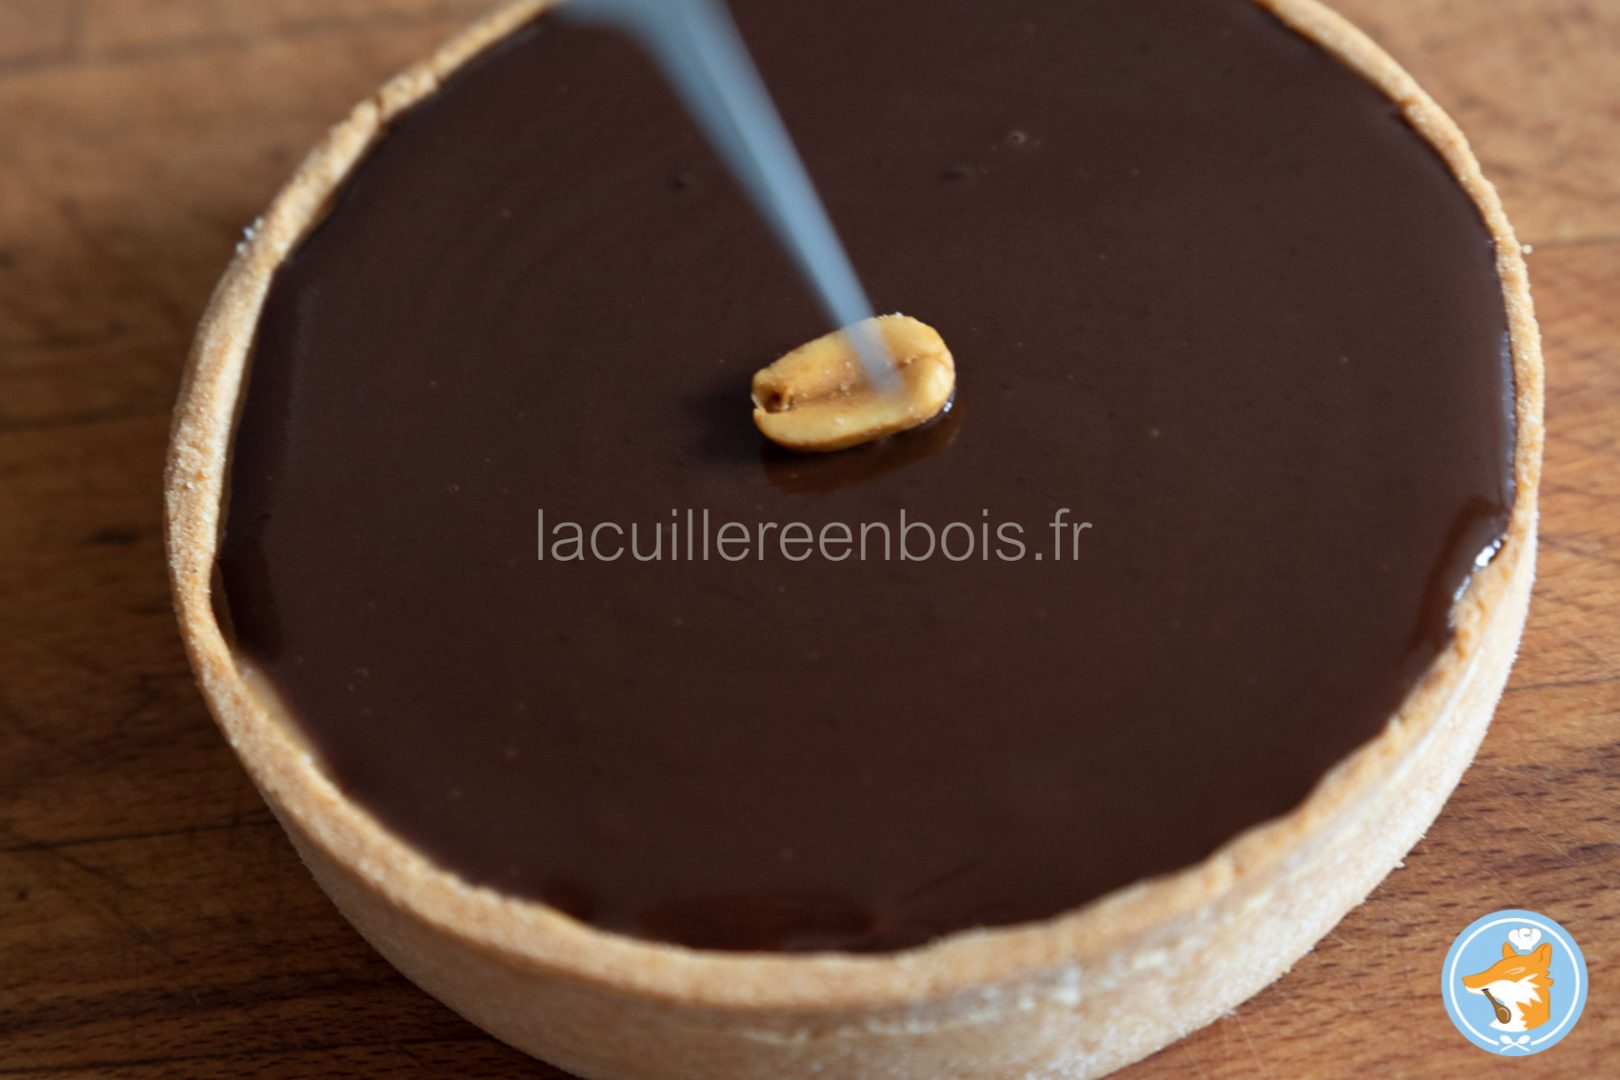 lacuillereenbois.fr_tartelette_façon_snickers_chocolat_caramel_cacahuètes